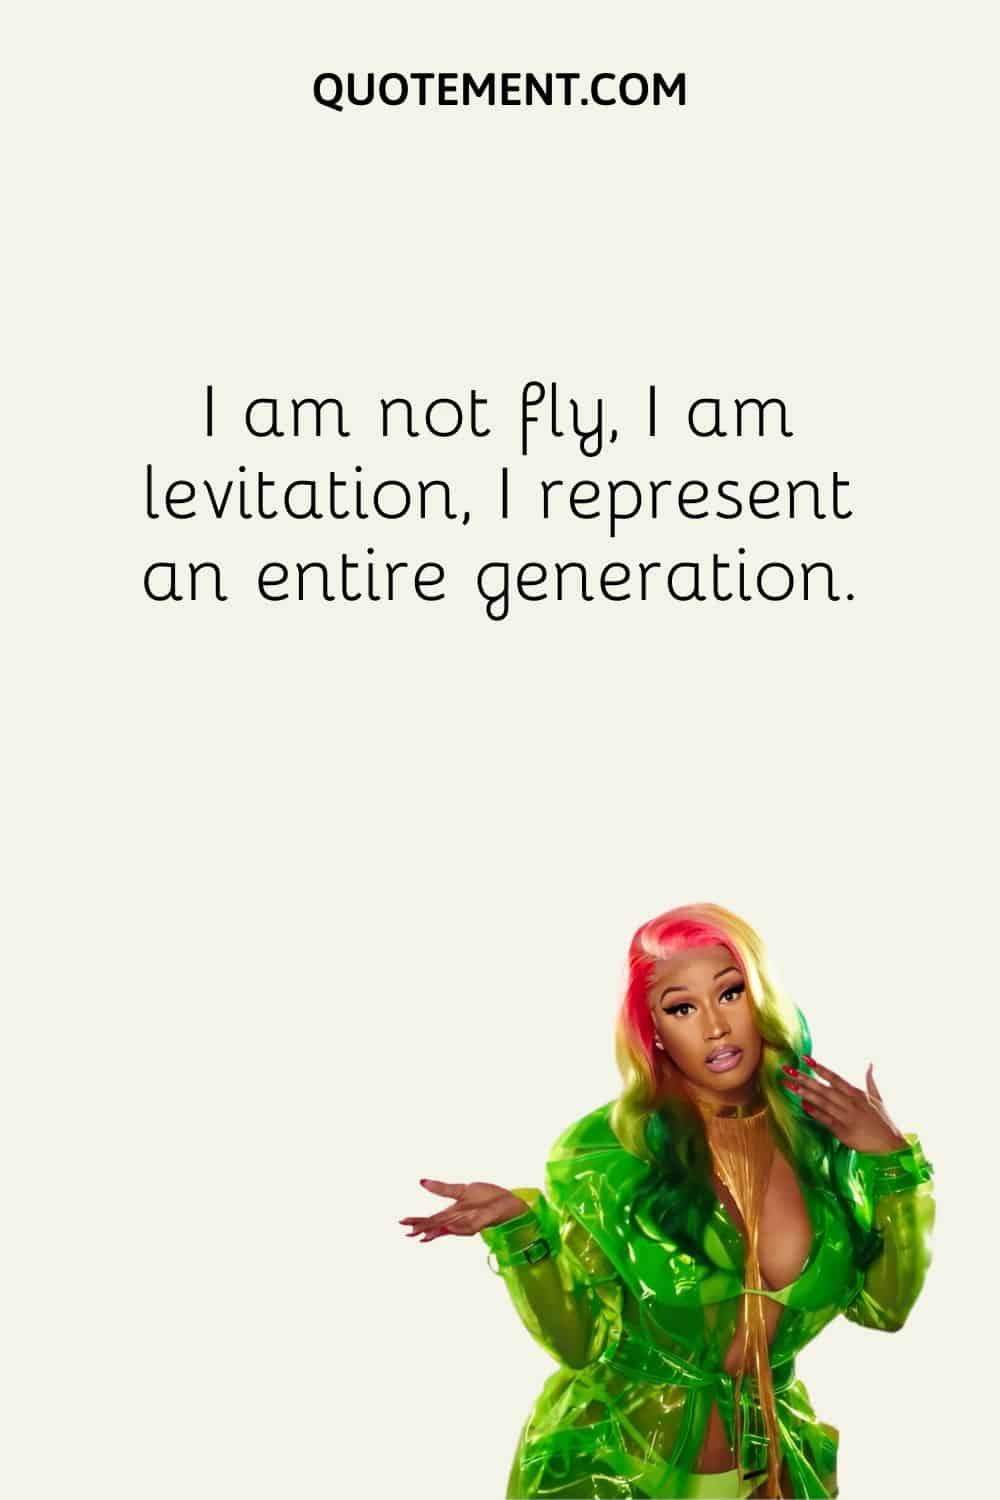 I am not fly, I am levitation, I represent an entire generation